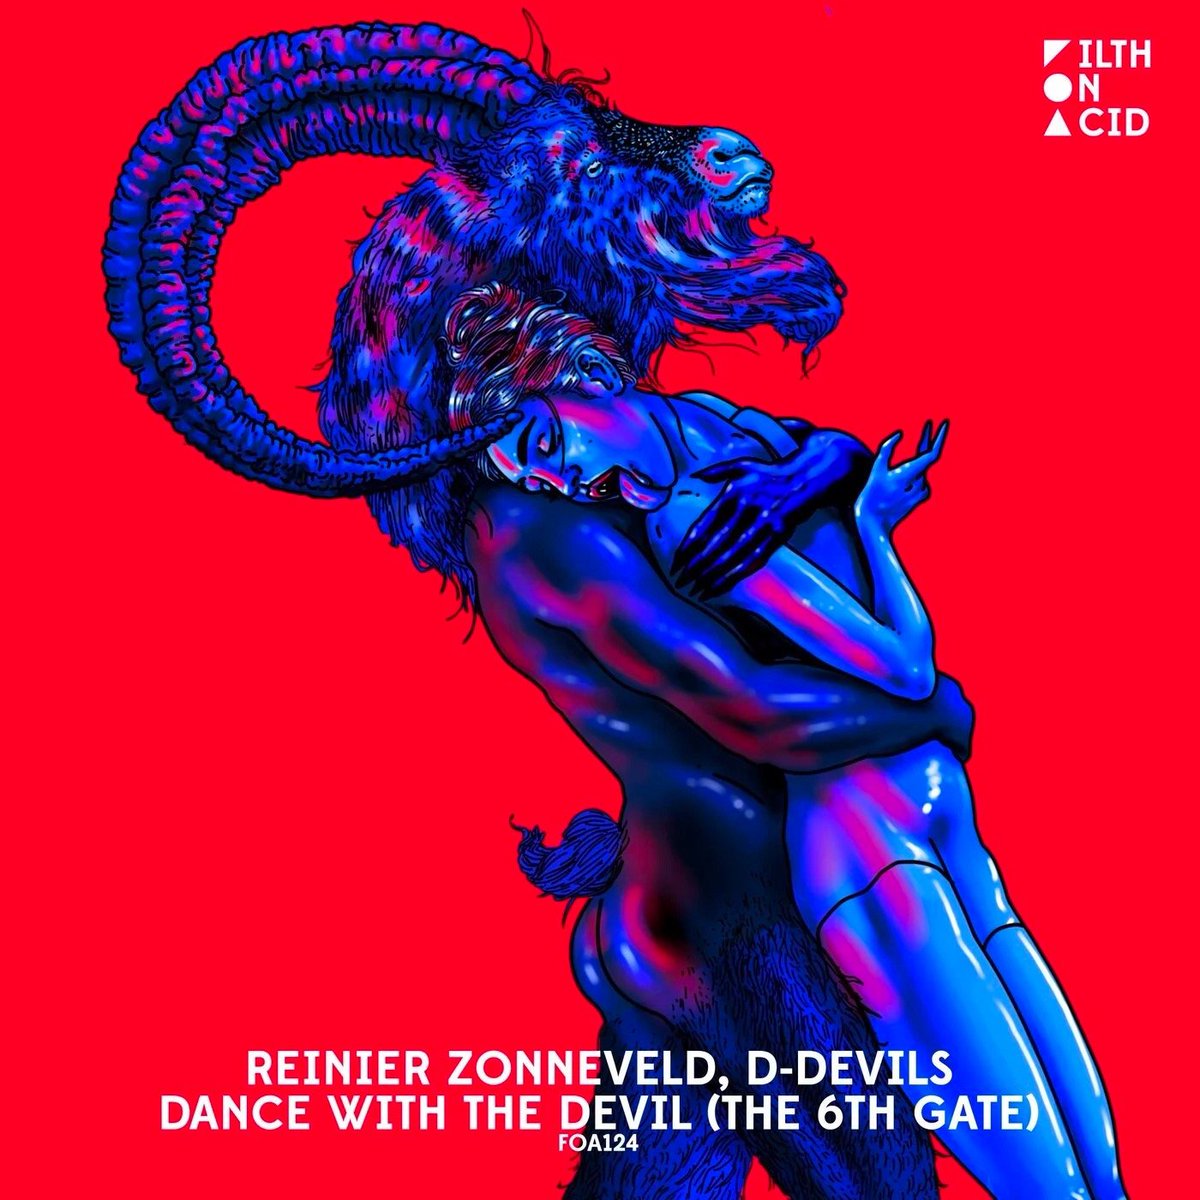 ON AIR 🔊 #NEWMUSICMIX
REINIER ZONNEVELD x D-DEVILS
Dance With The Devil (The 6th Gate)
Reinier Zonneveld 12' Remix

STREAM mixcloud.com/TheRecordDocto…

@reinierzonnevel